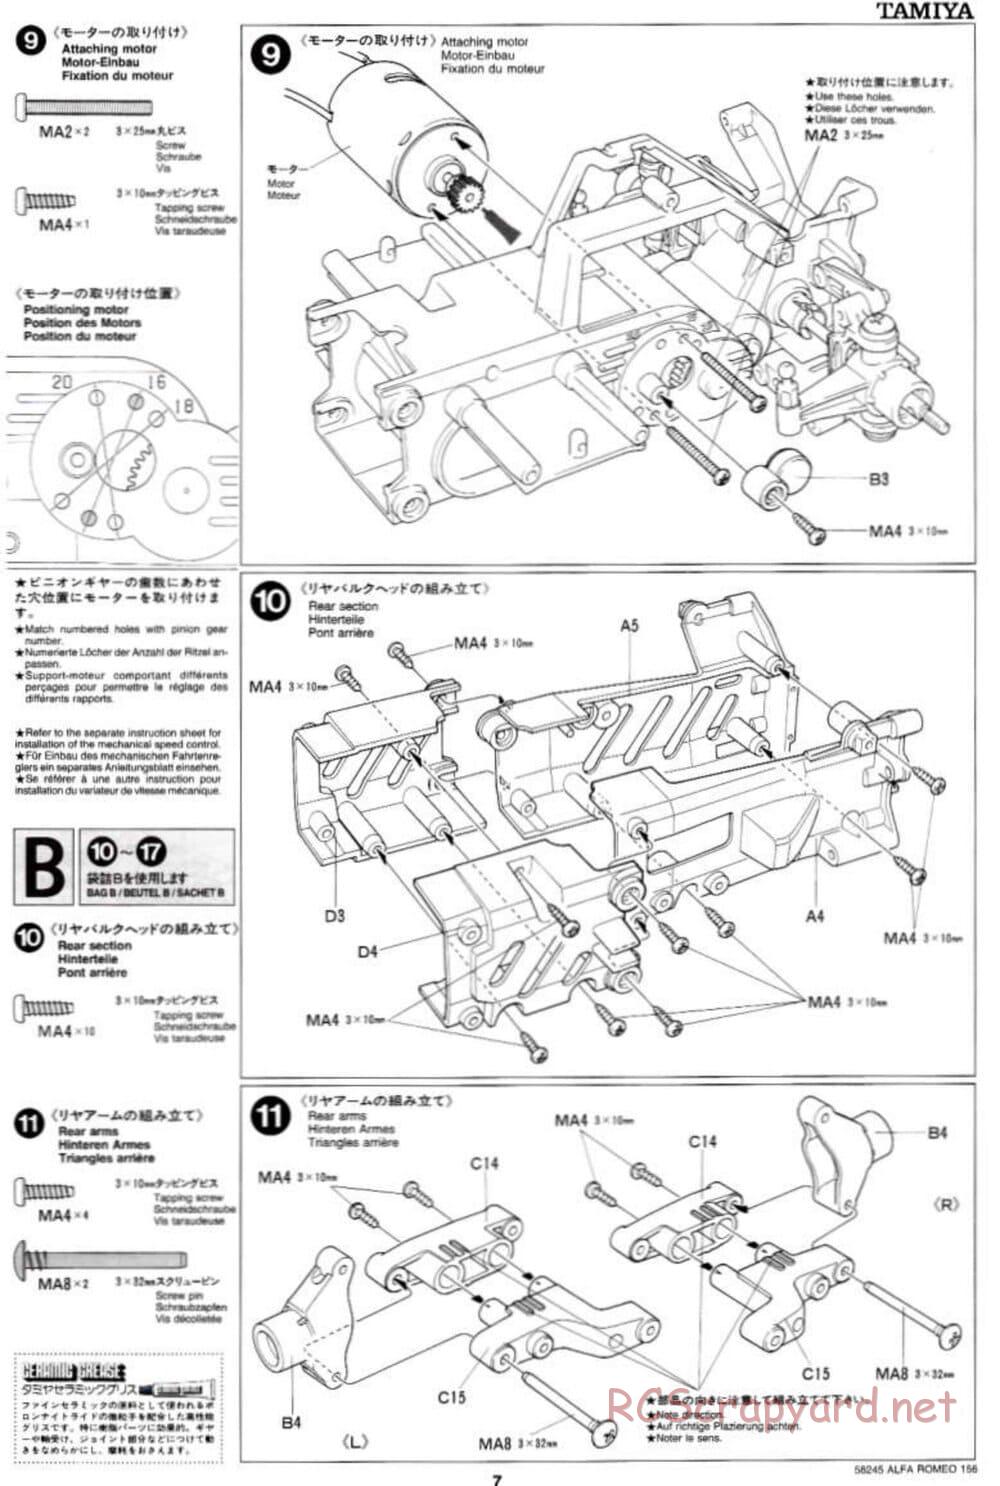 Tamiya - Alfa Romeo 156 Racing - FF-02 Chassis - Manual - Page 7